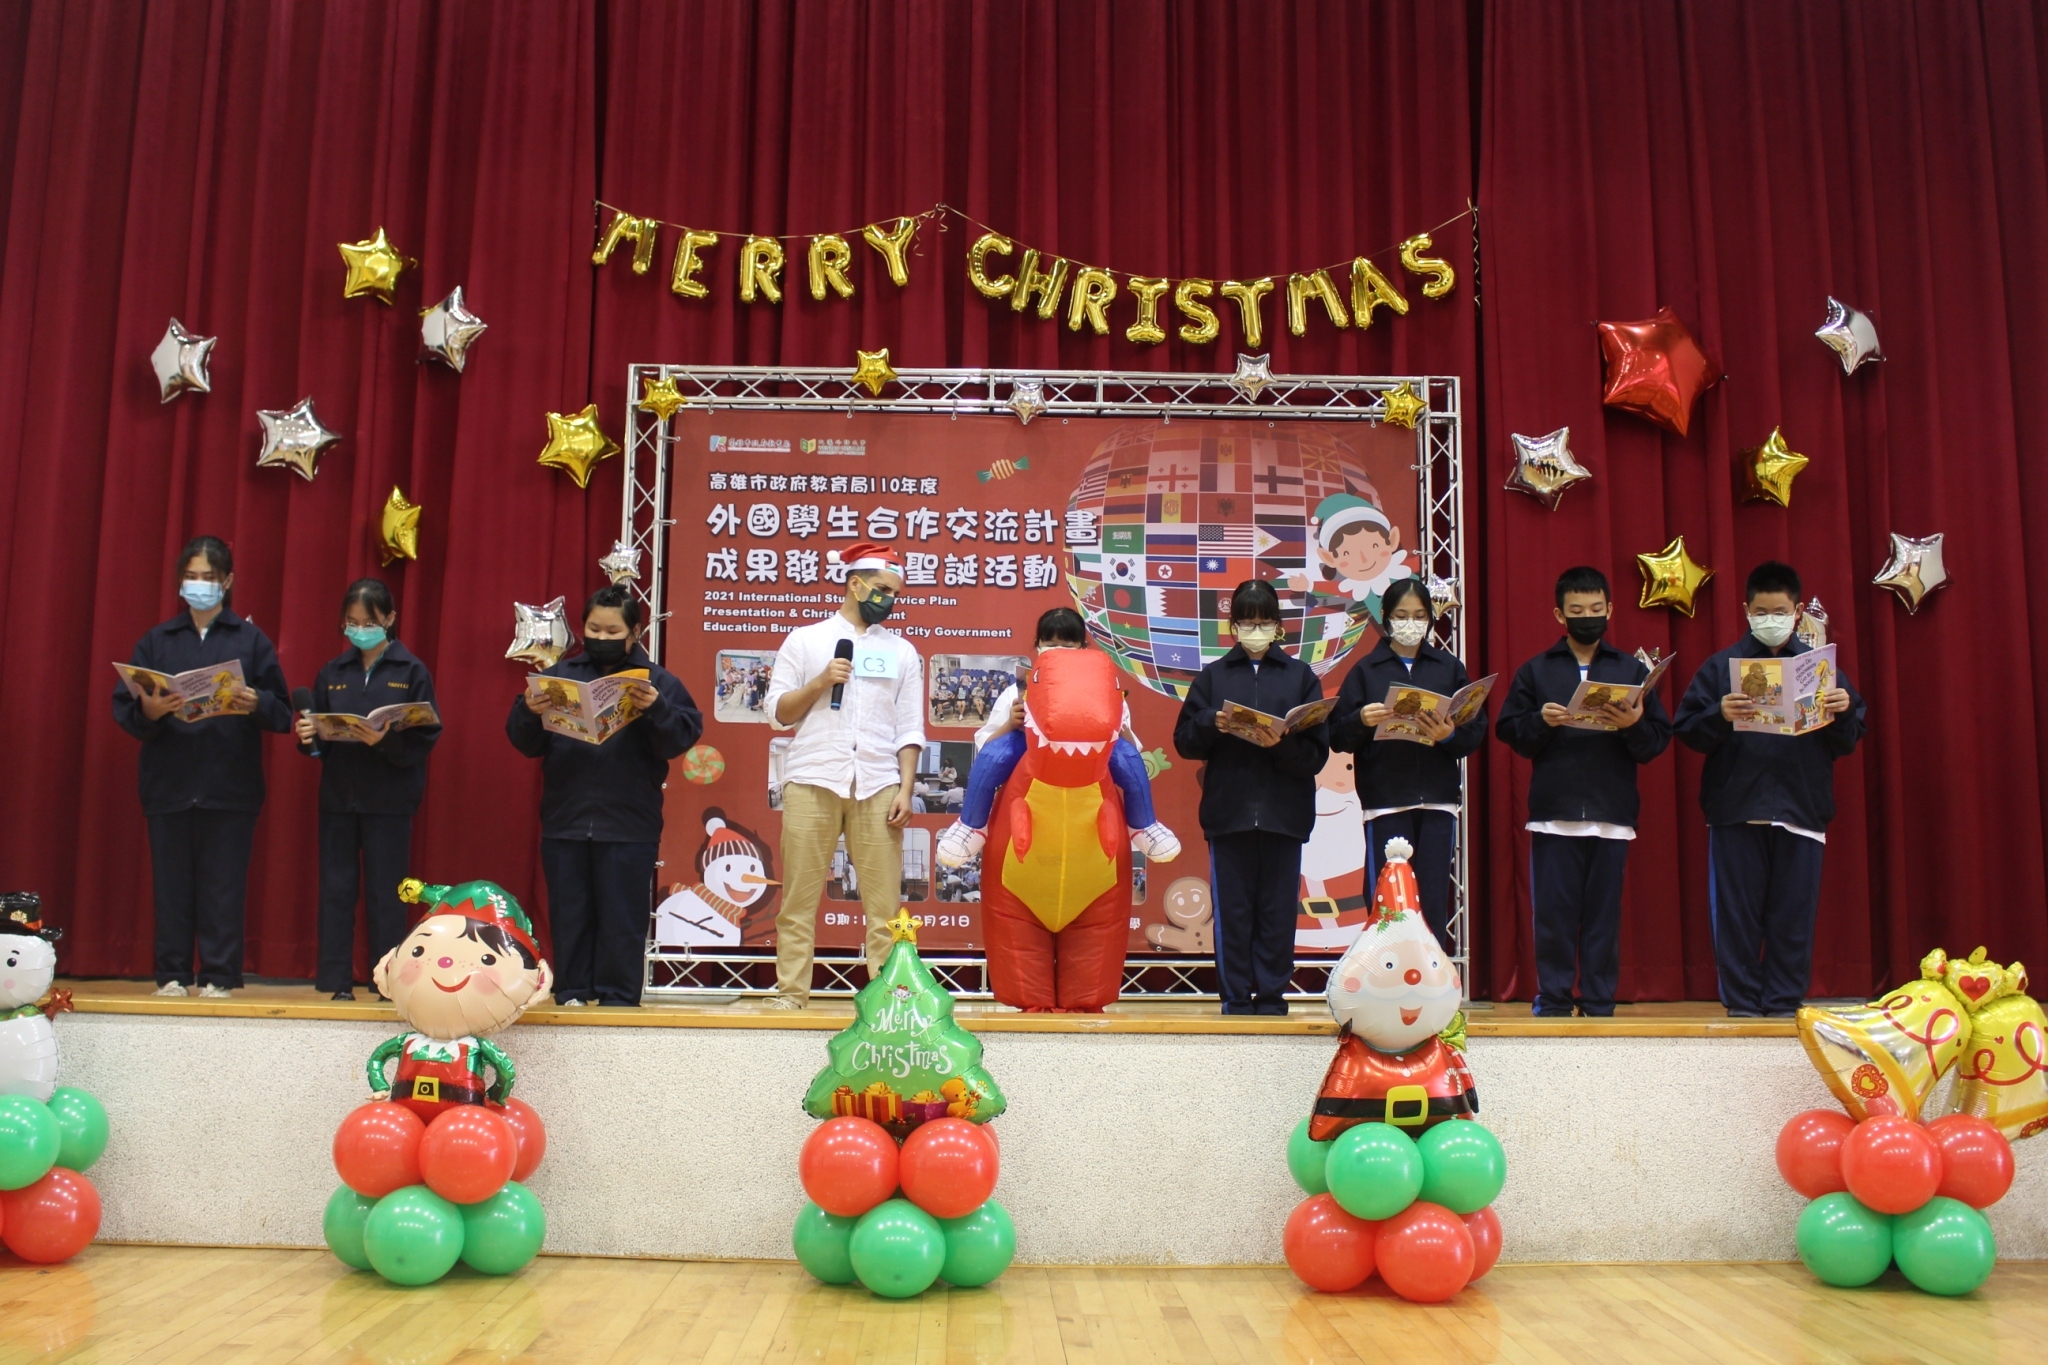 500 schoolchildren sing Christmas carols together